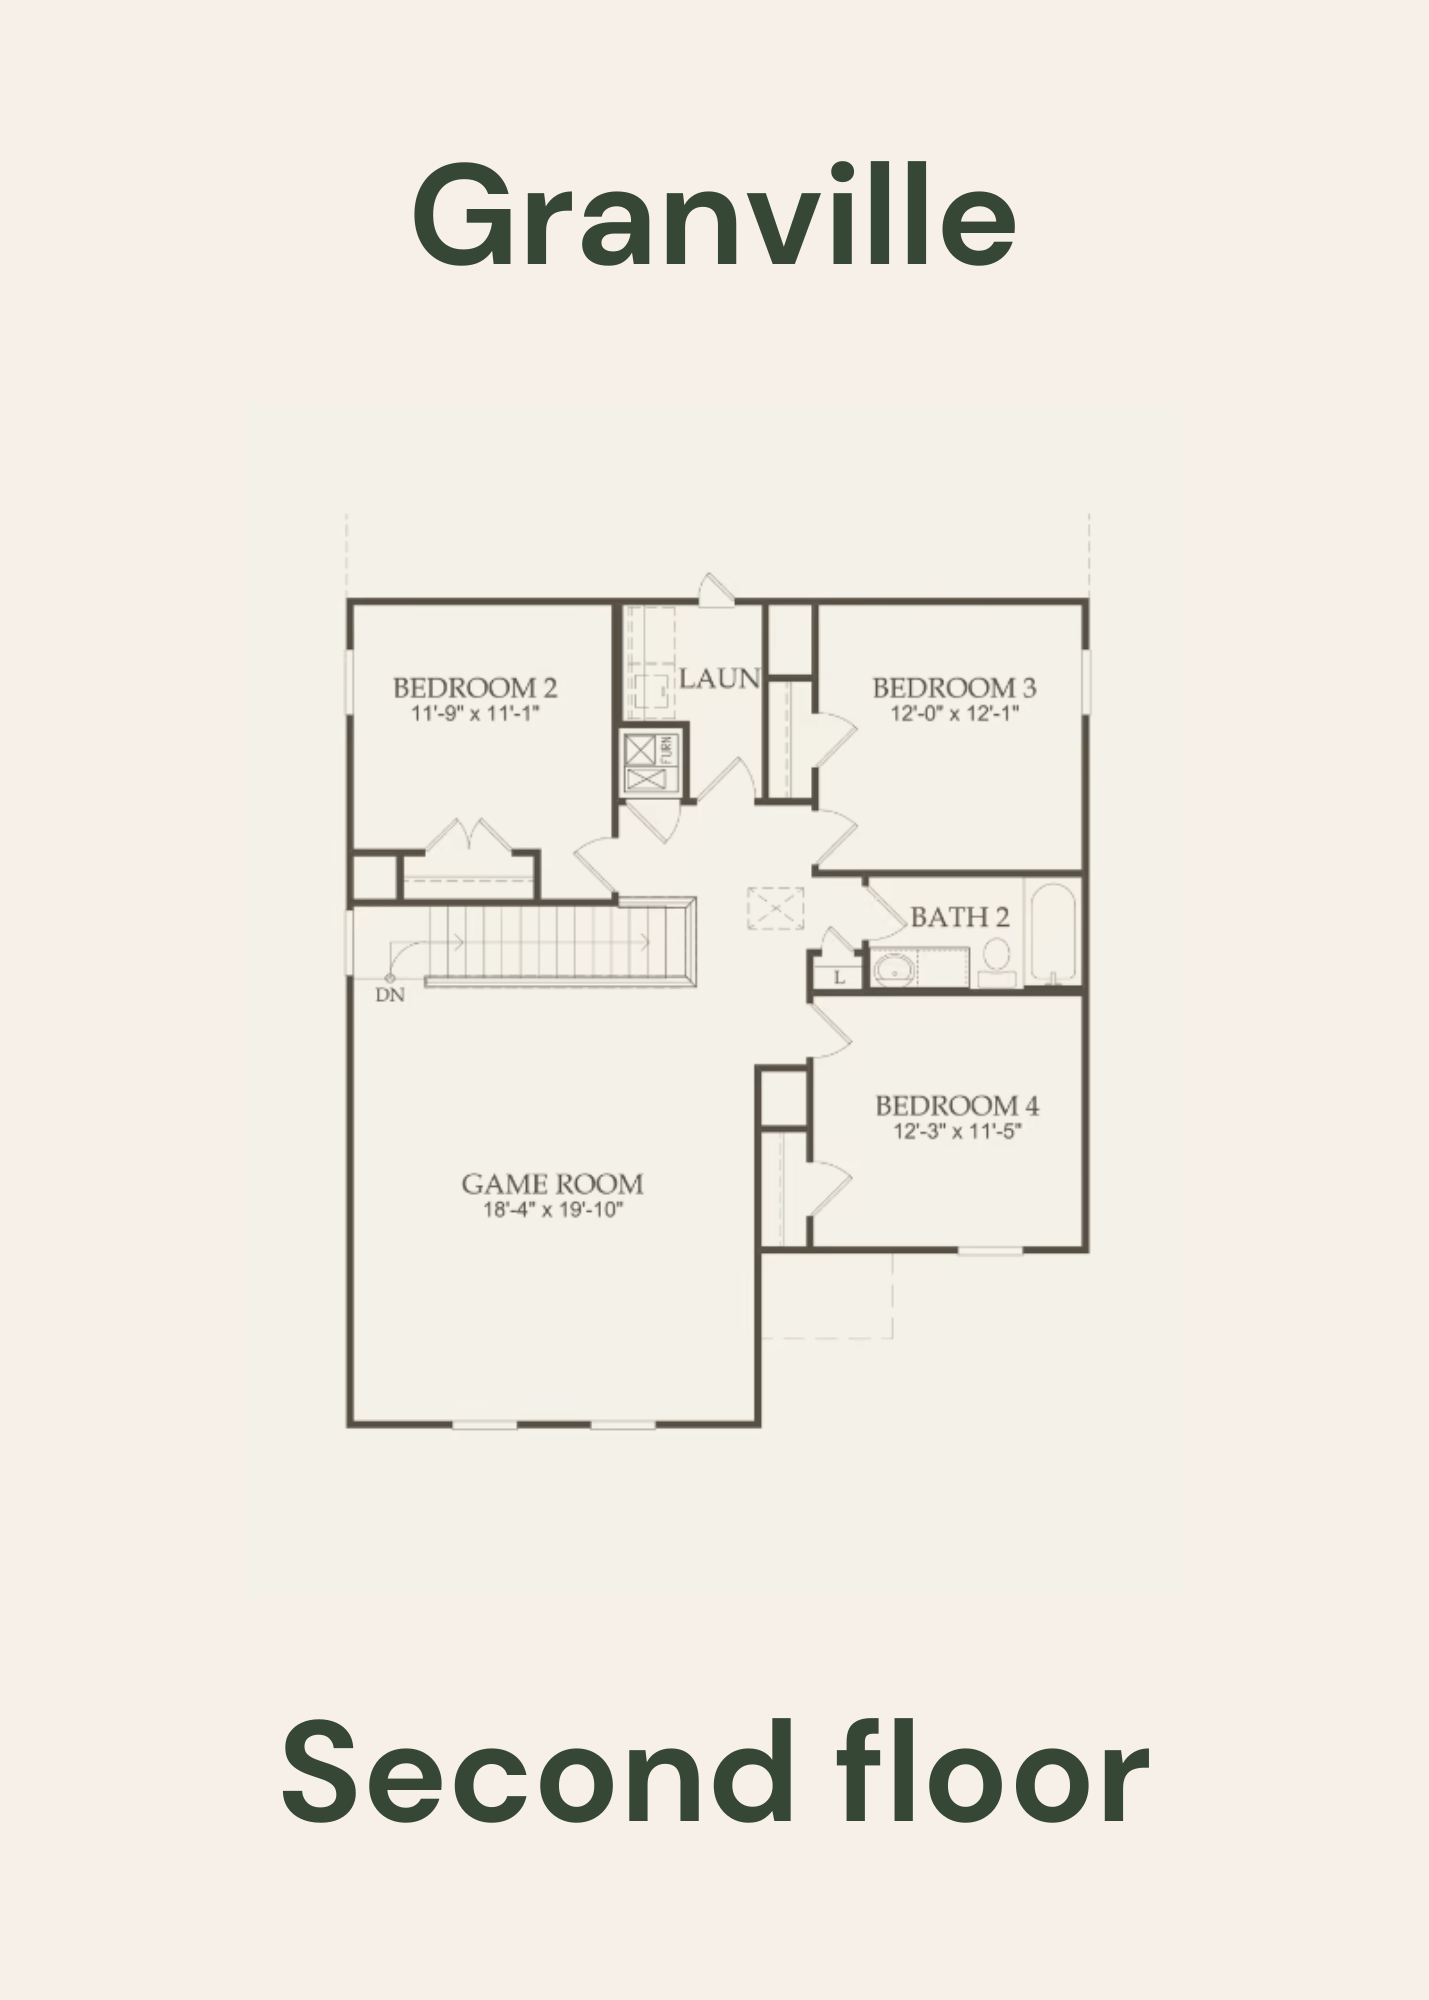 Granville Second Floor - Floor Plan by Centex Homes